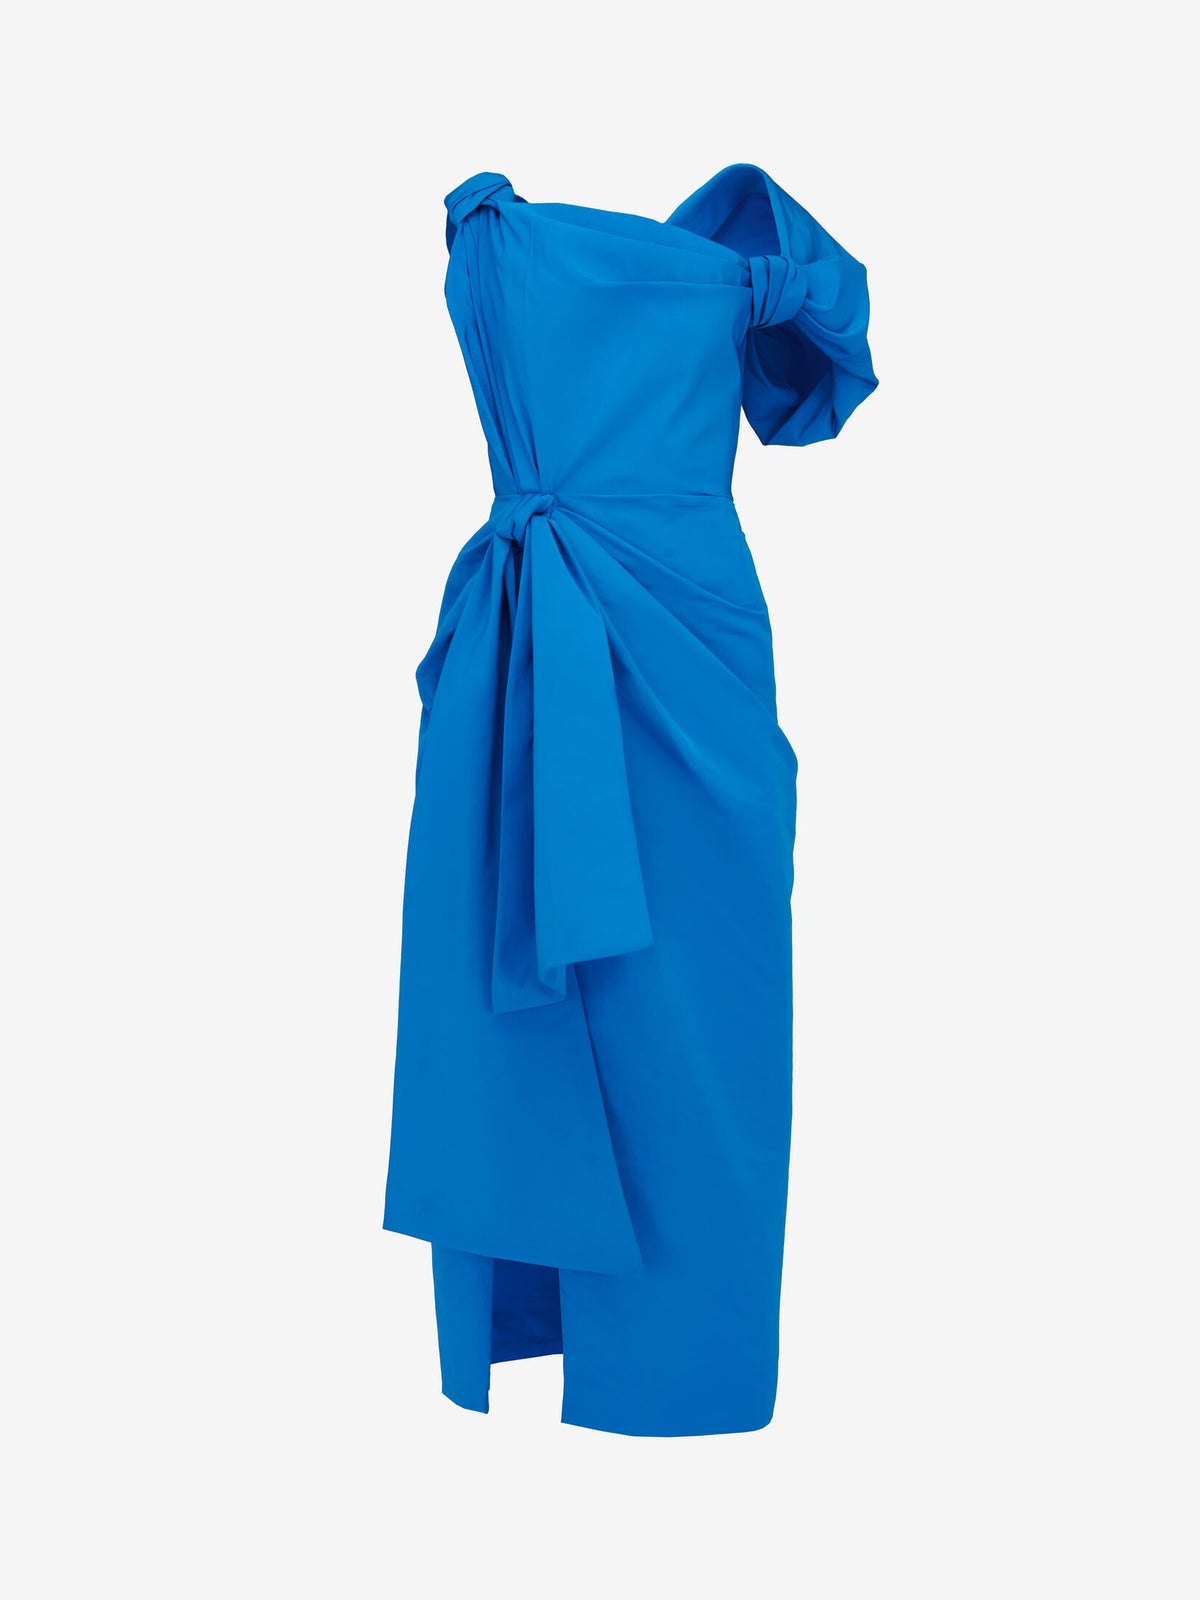 Women's Knotted Asymmetric Pencil Dress in Lapis Blue